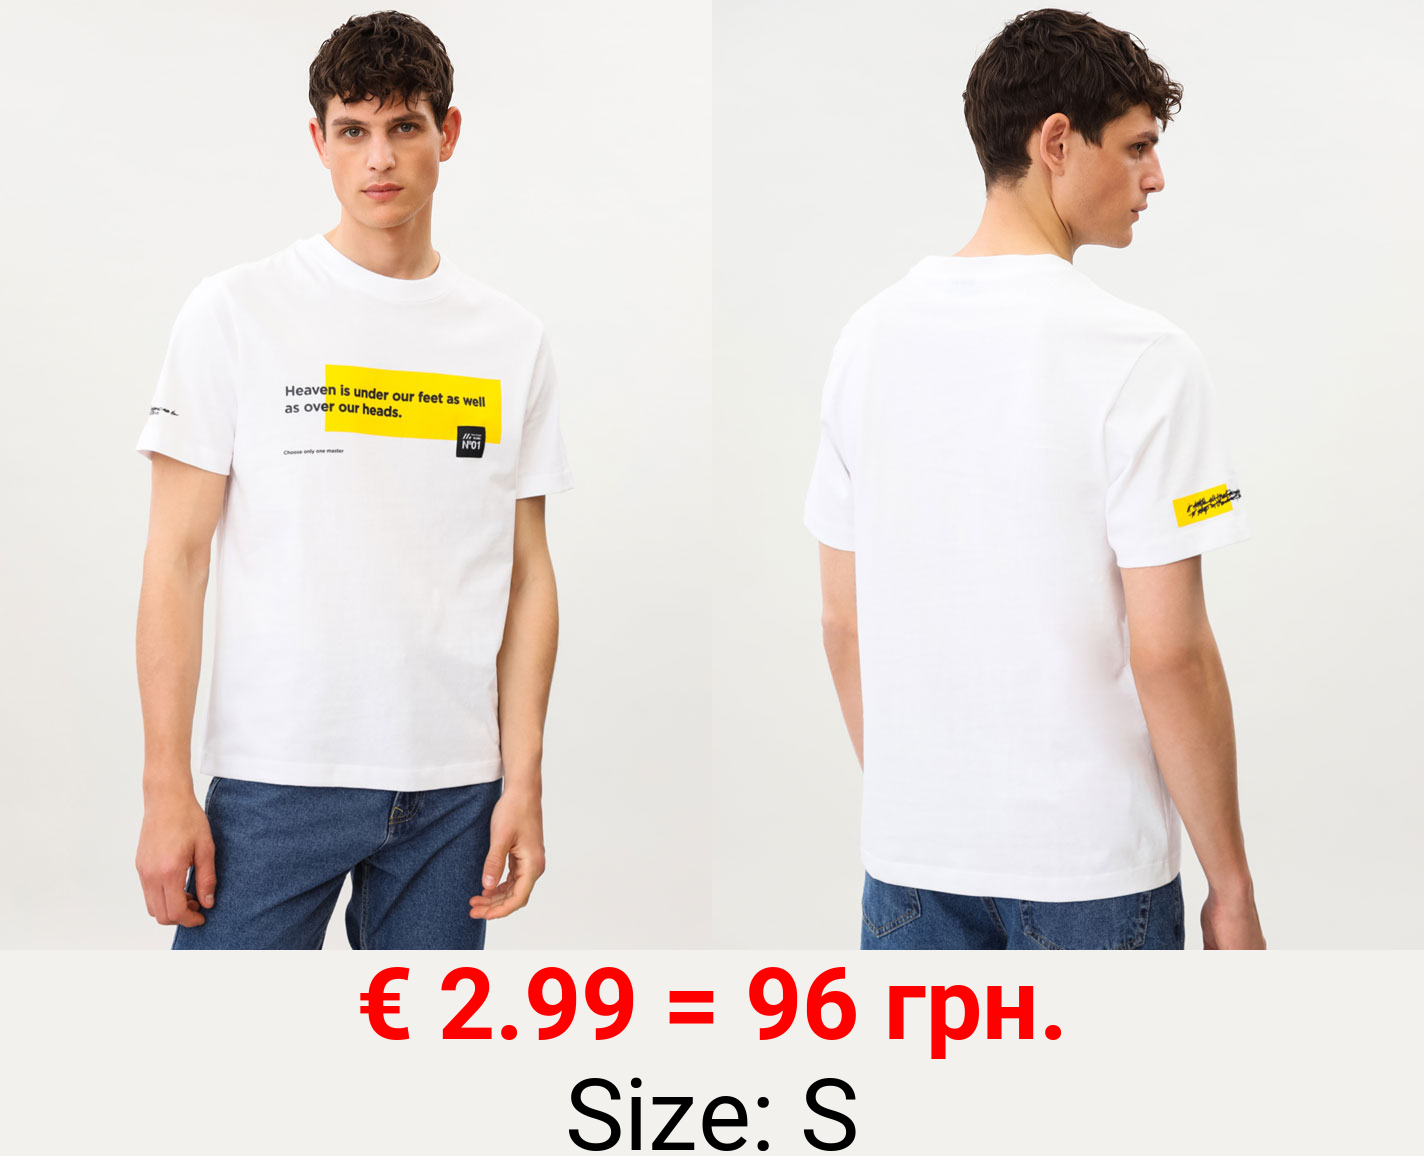 Short sleeve printed T-shirt